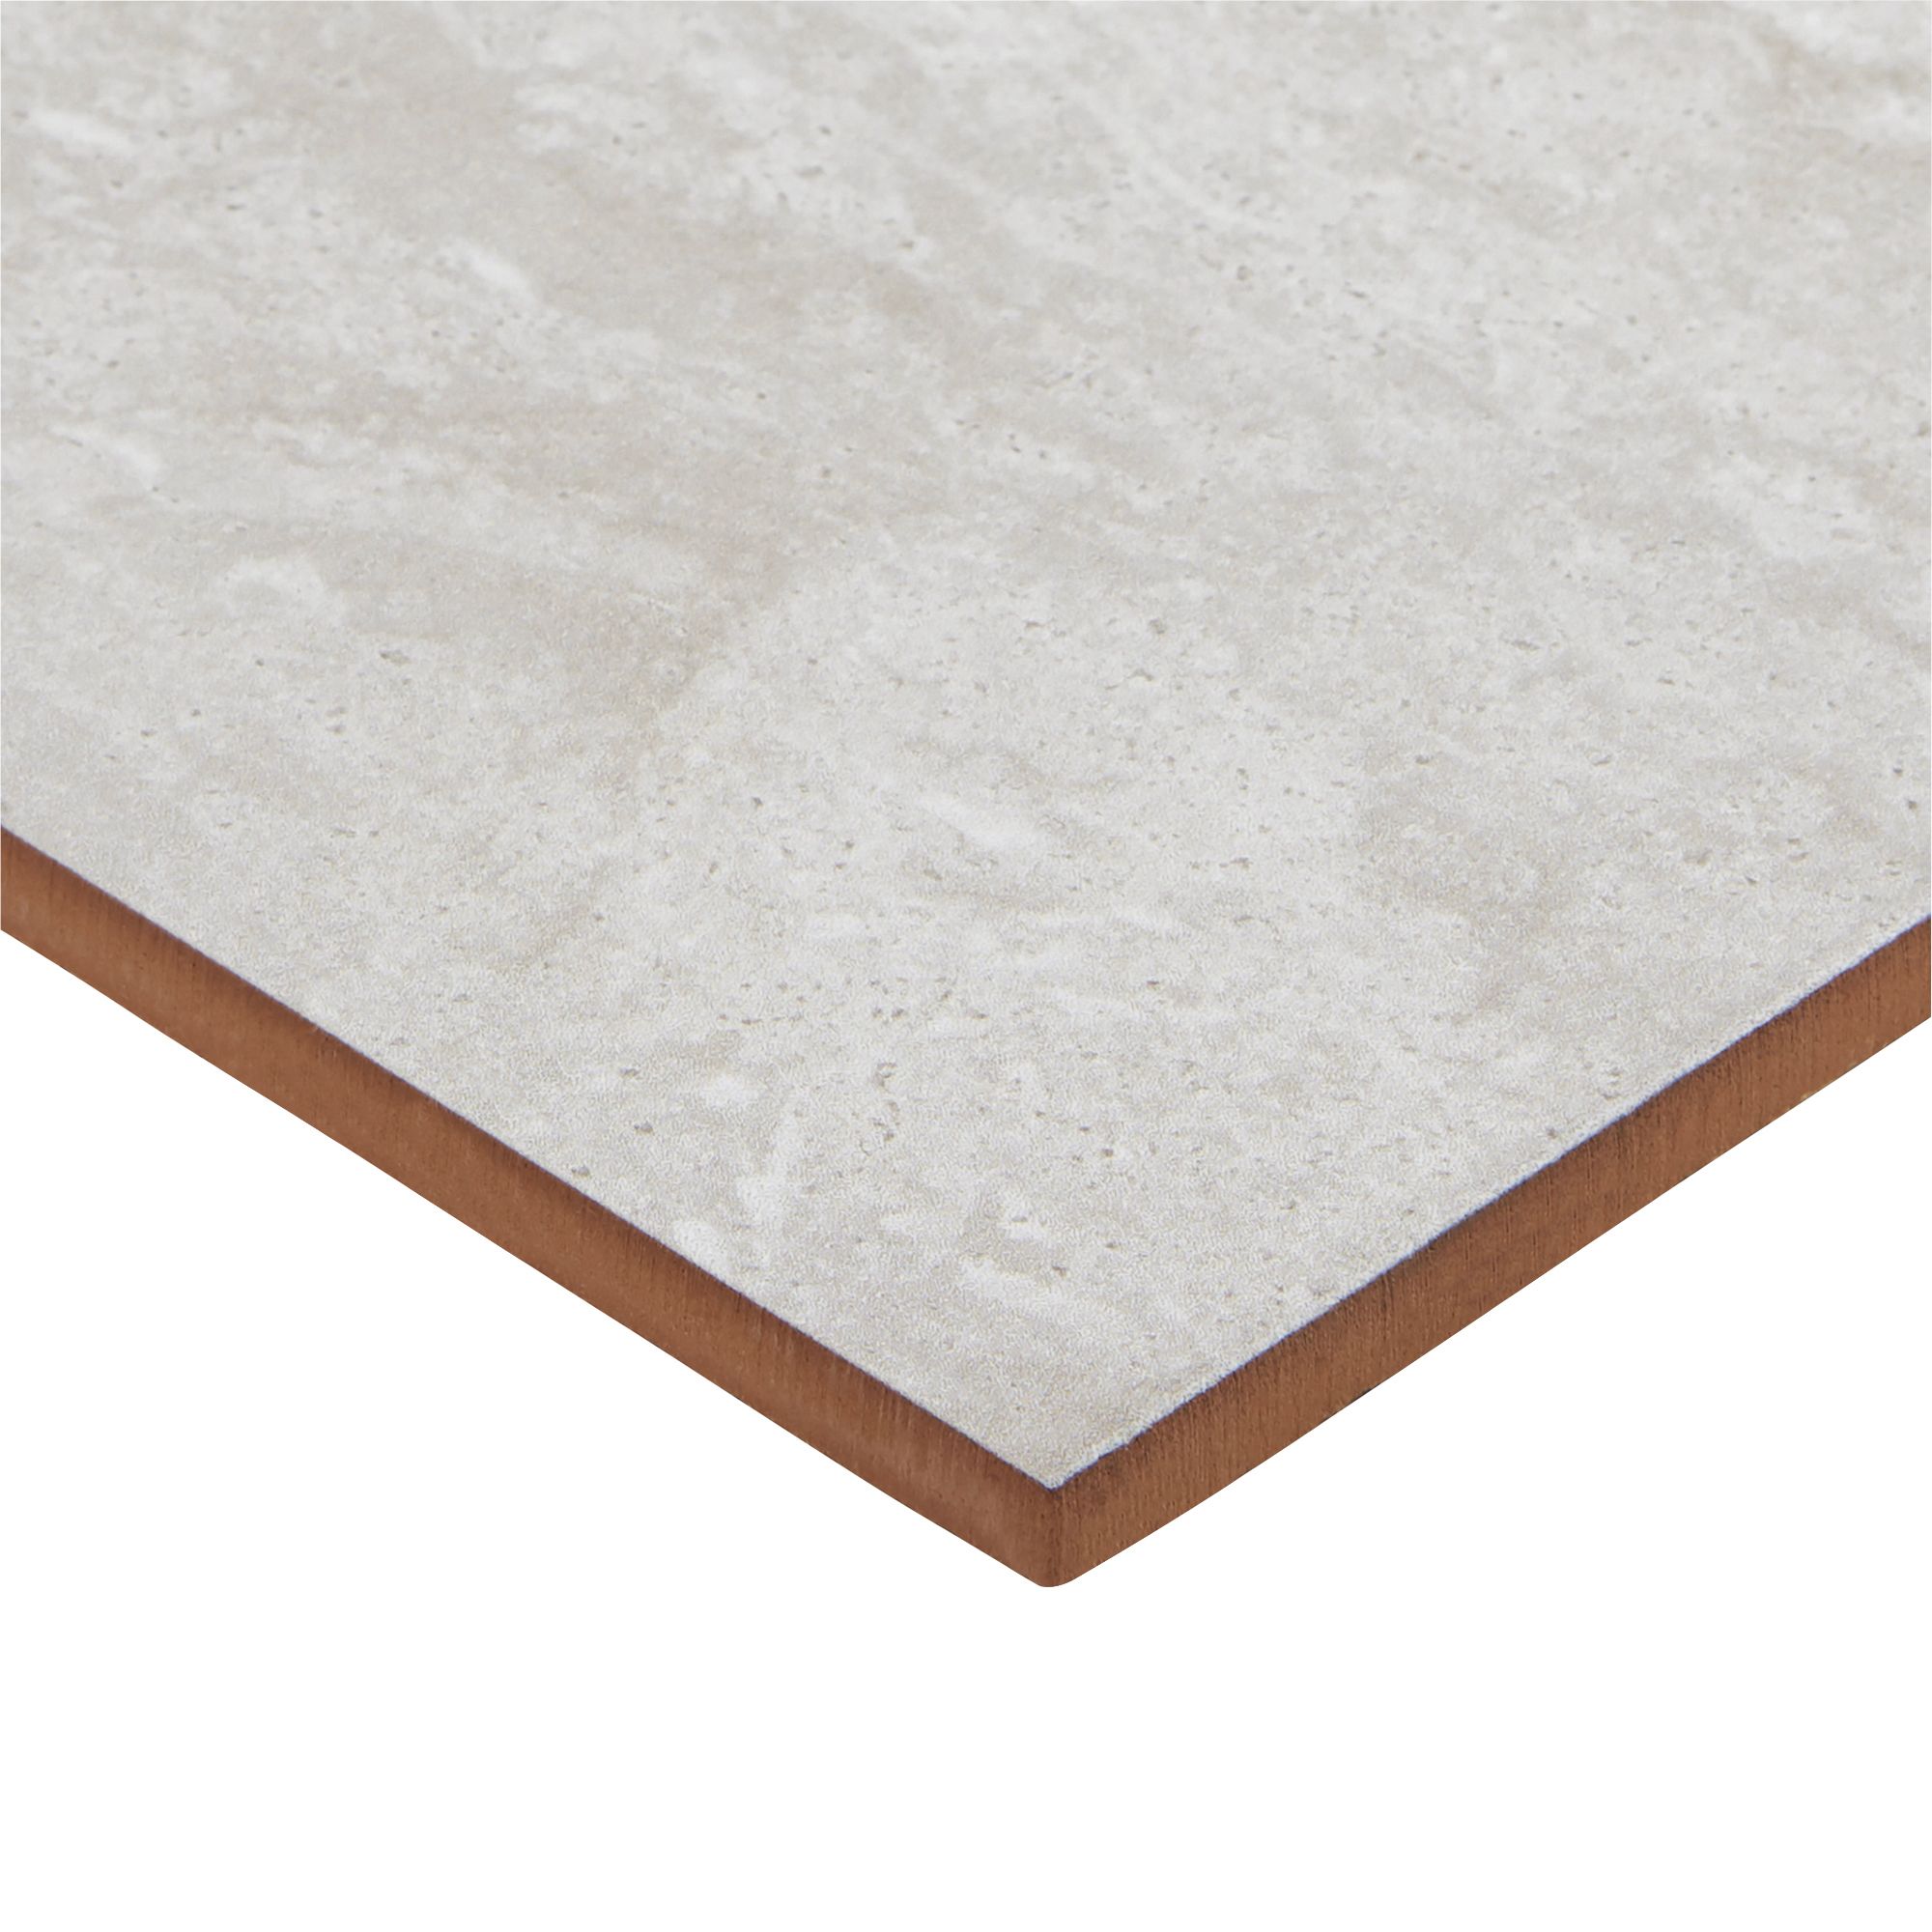 Soft travertin Light grey Gloss Stone effect Ceramic Tile, Pack of 9, (L)600mm (W)200mm